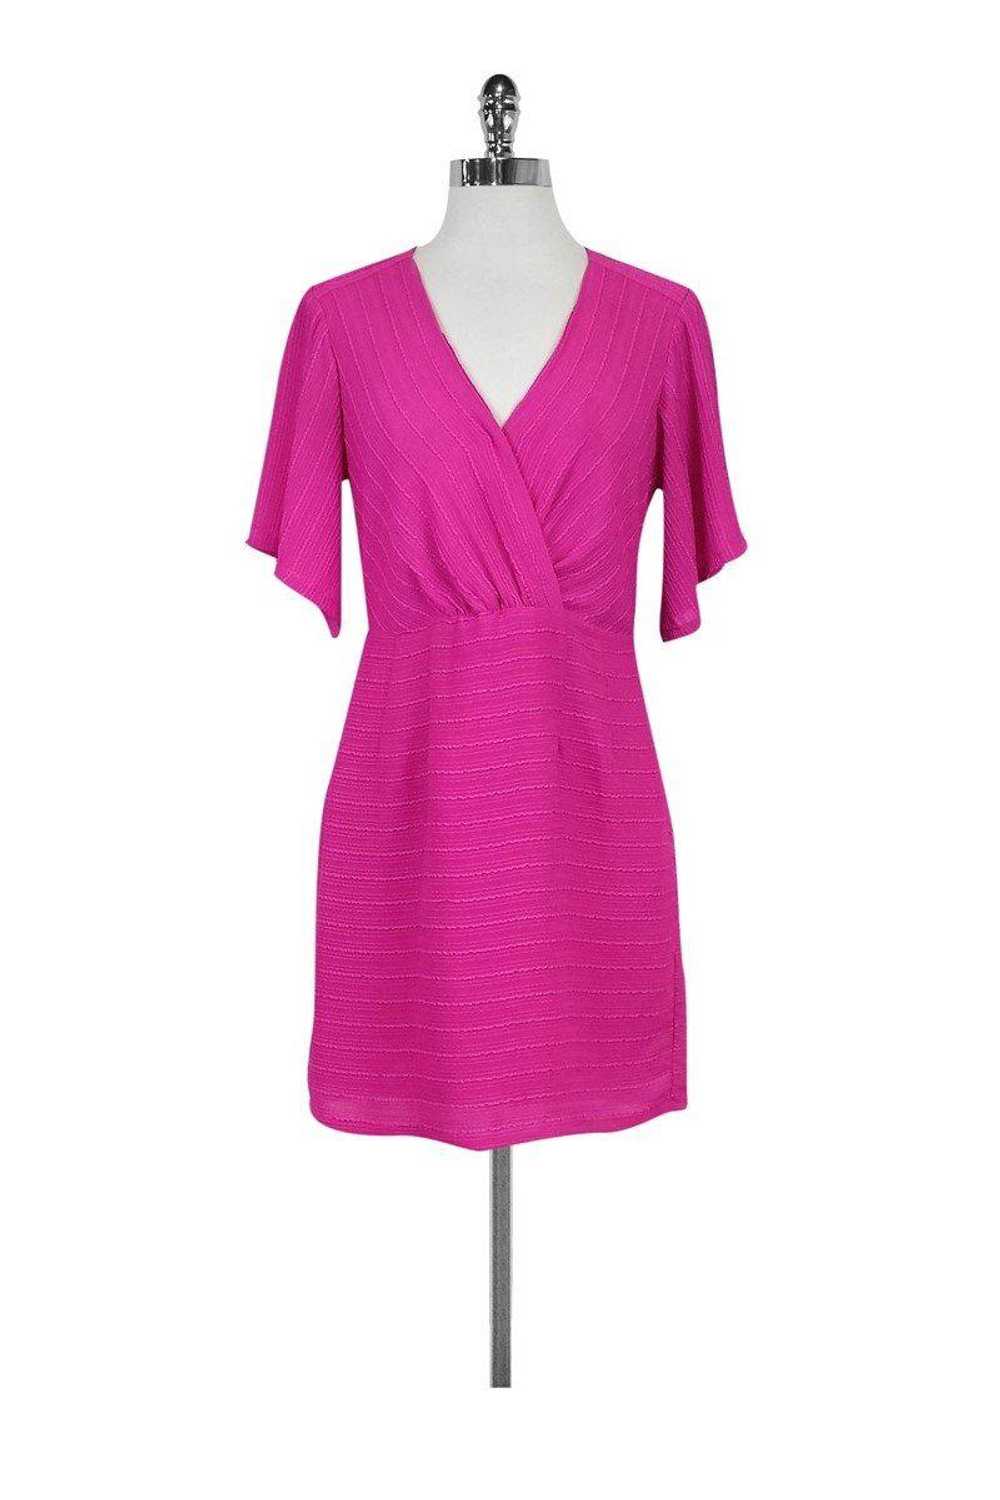 Nanette Lepore - Hot Pink Textured Dress Sz 2 - image 1